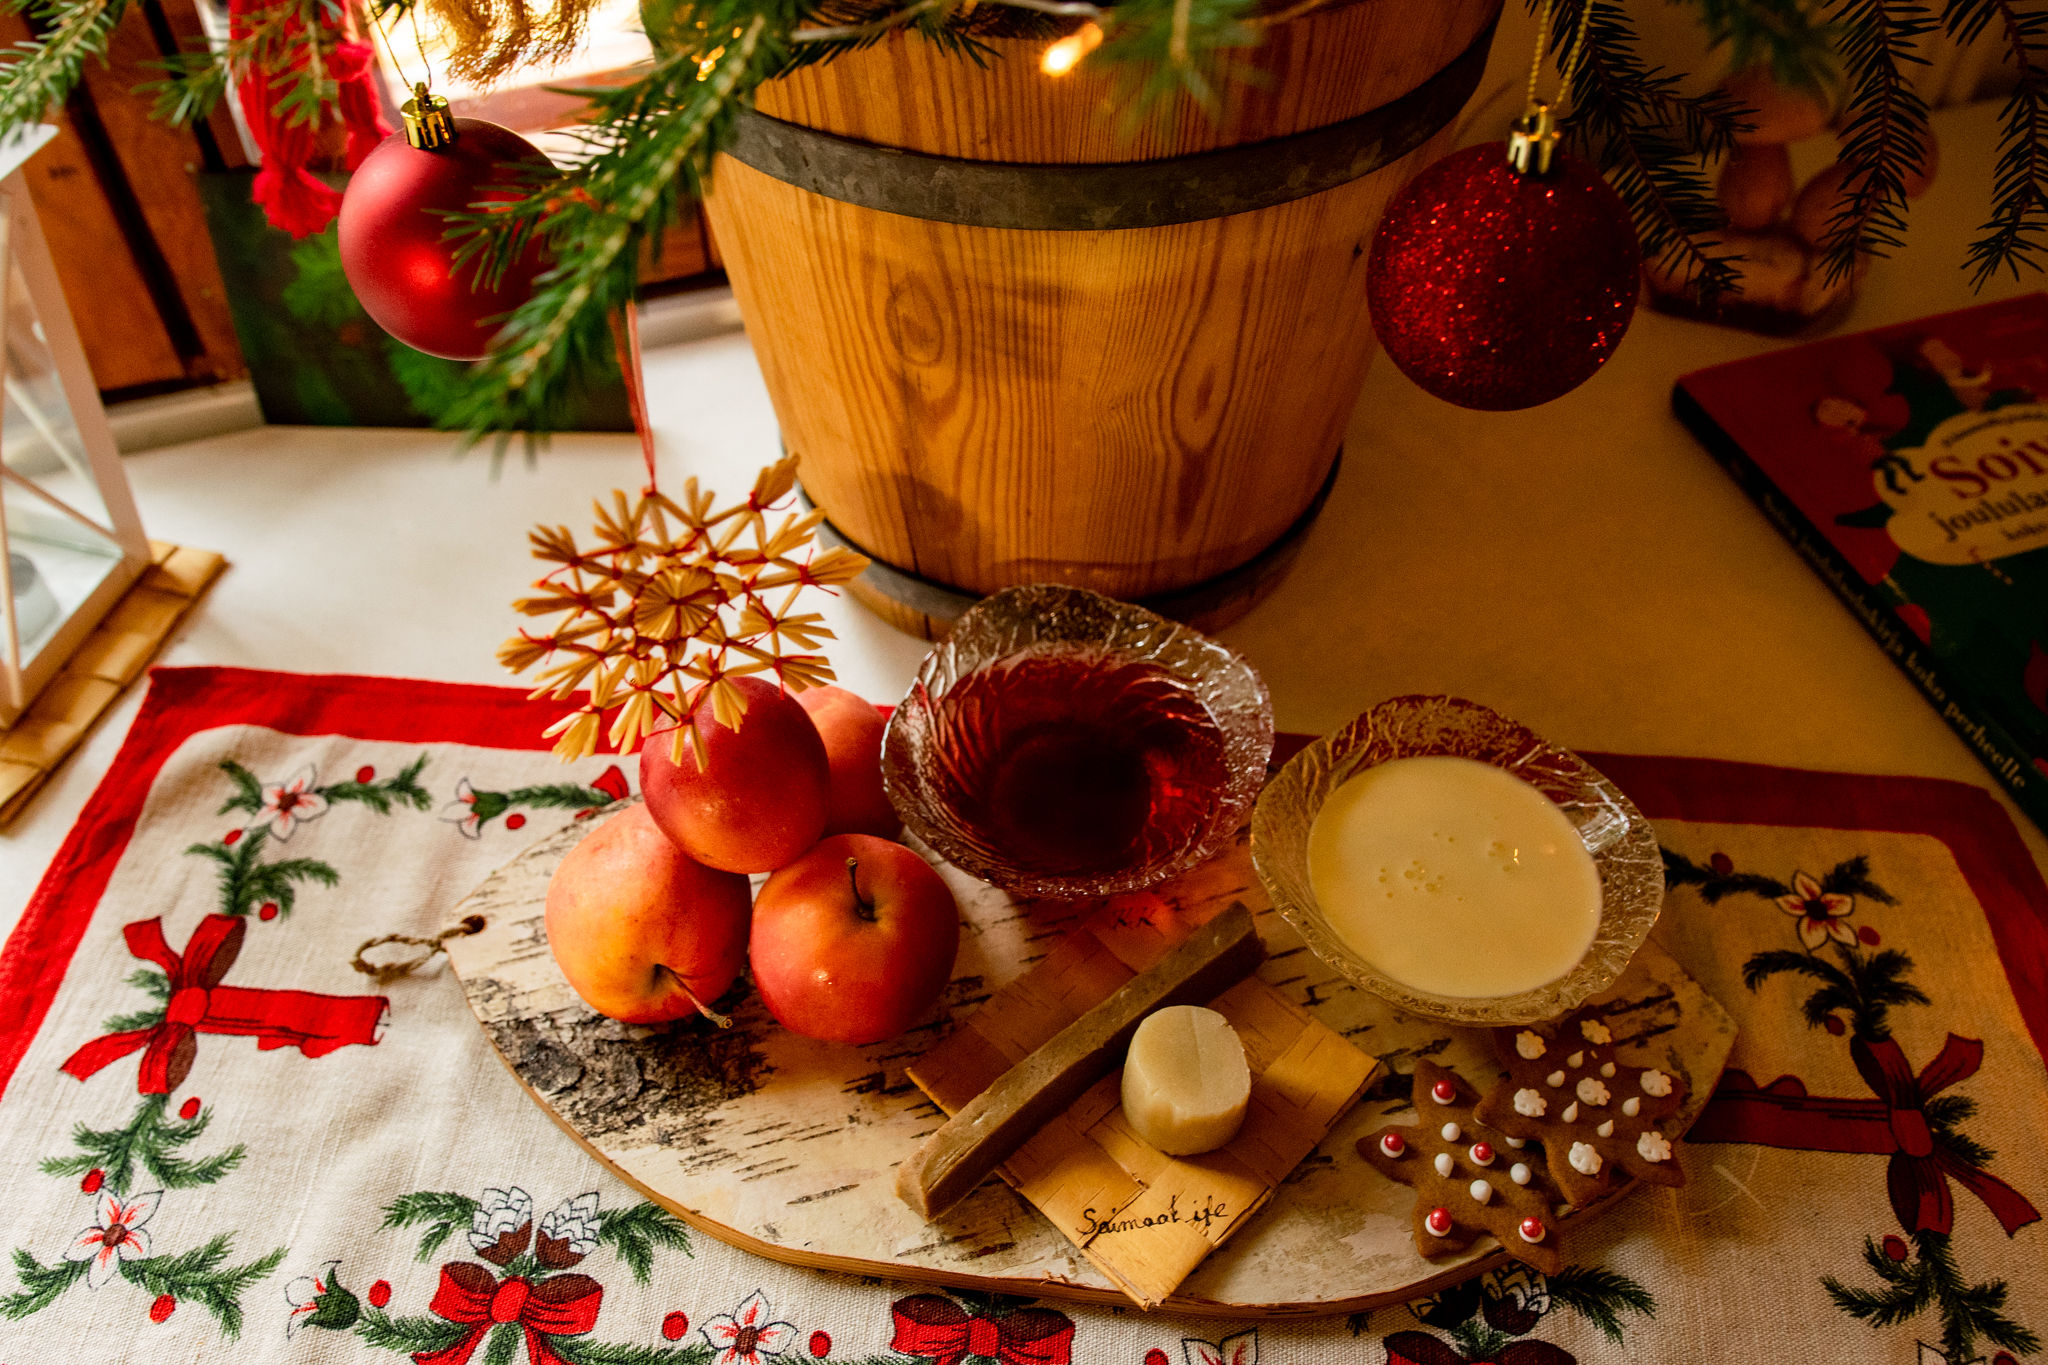 Ingredients for saimaaLife simple Christmas apple dessert recipe